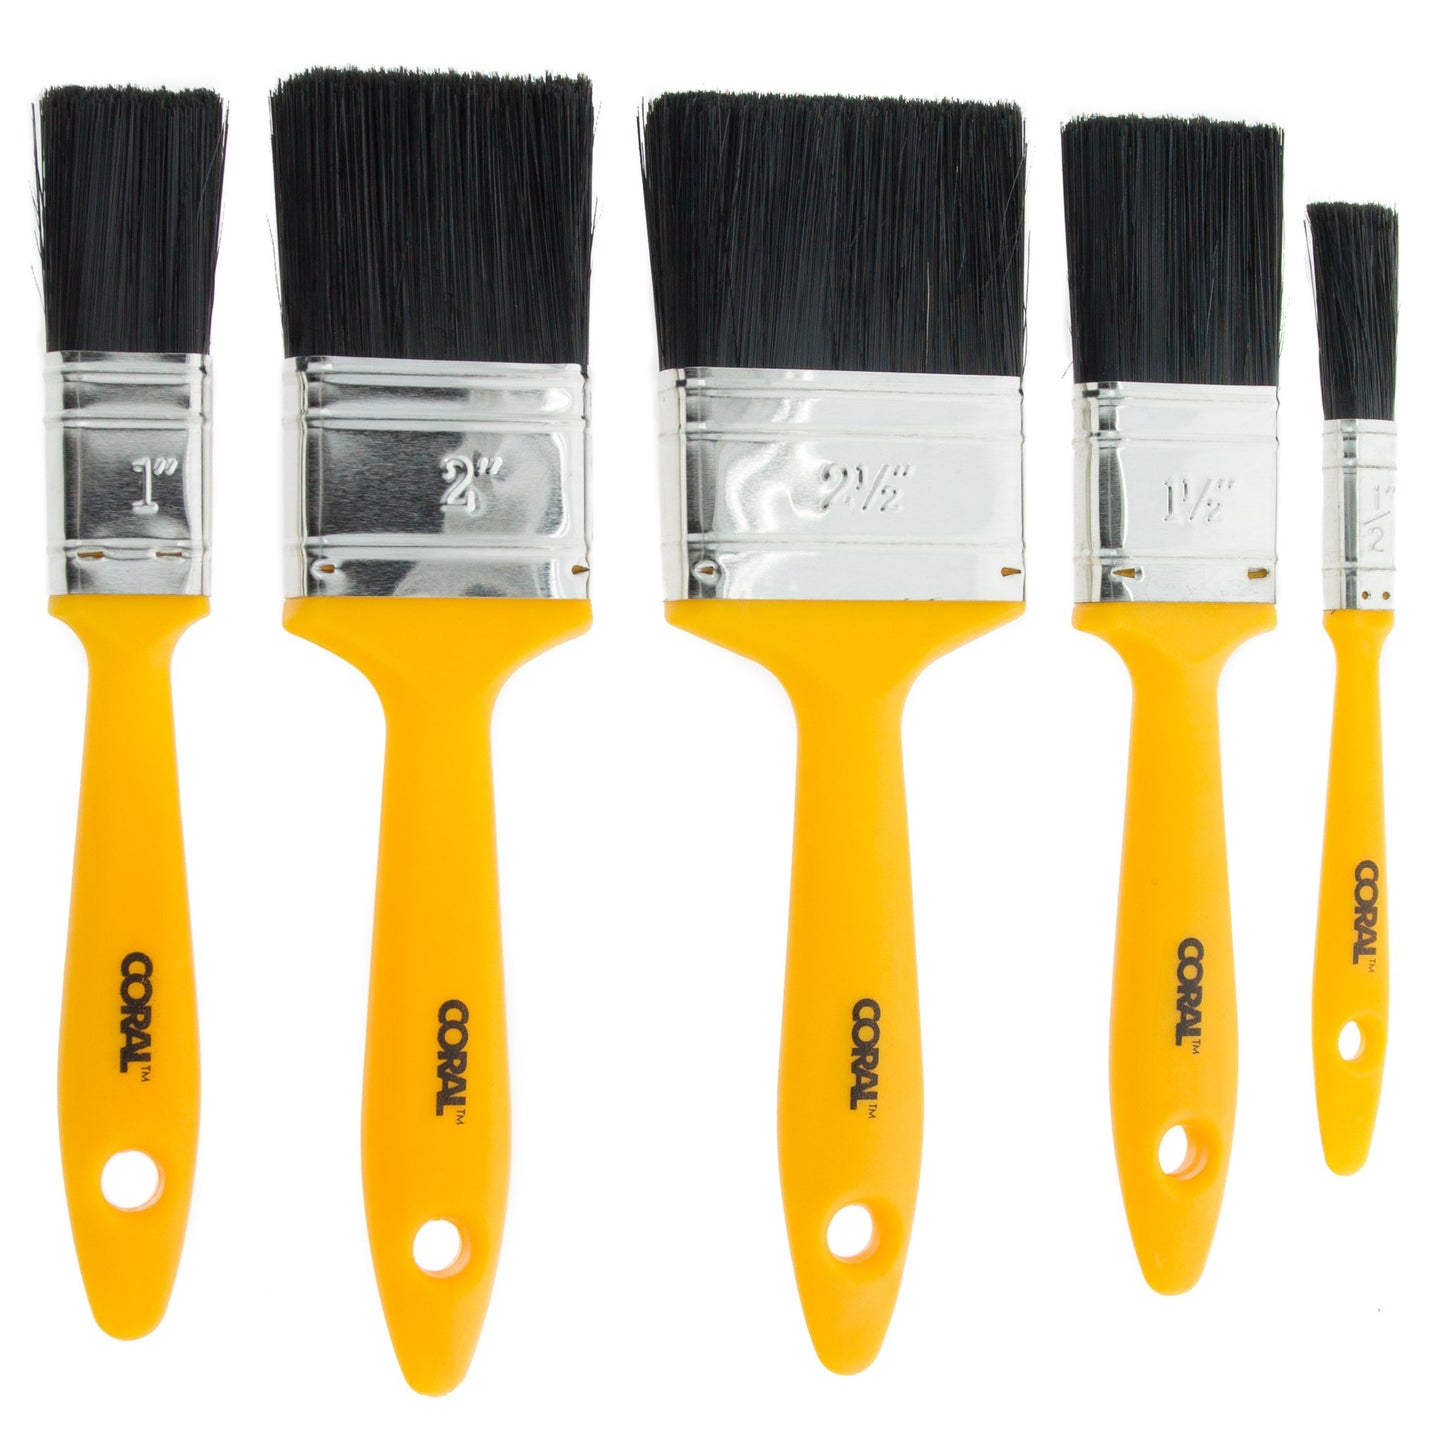 Essentials Paint Brush Set 5 piece